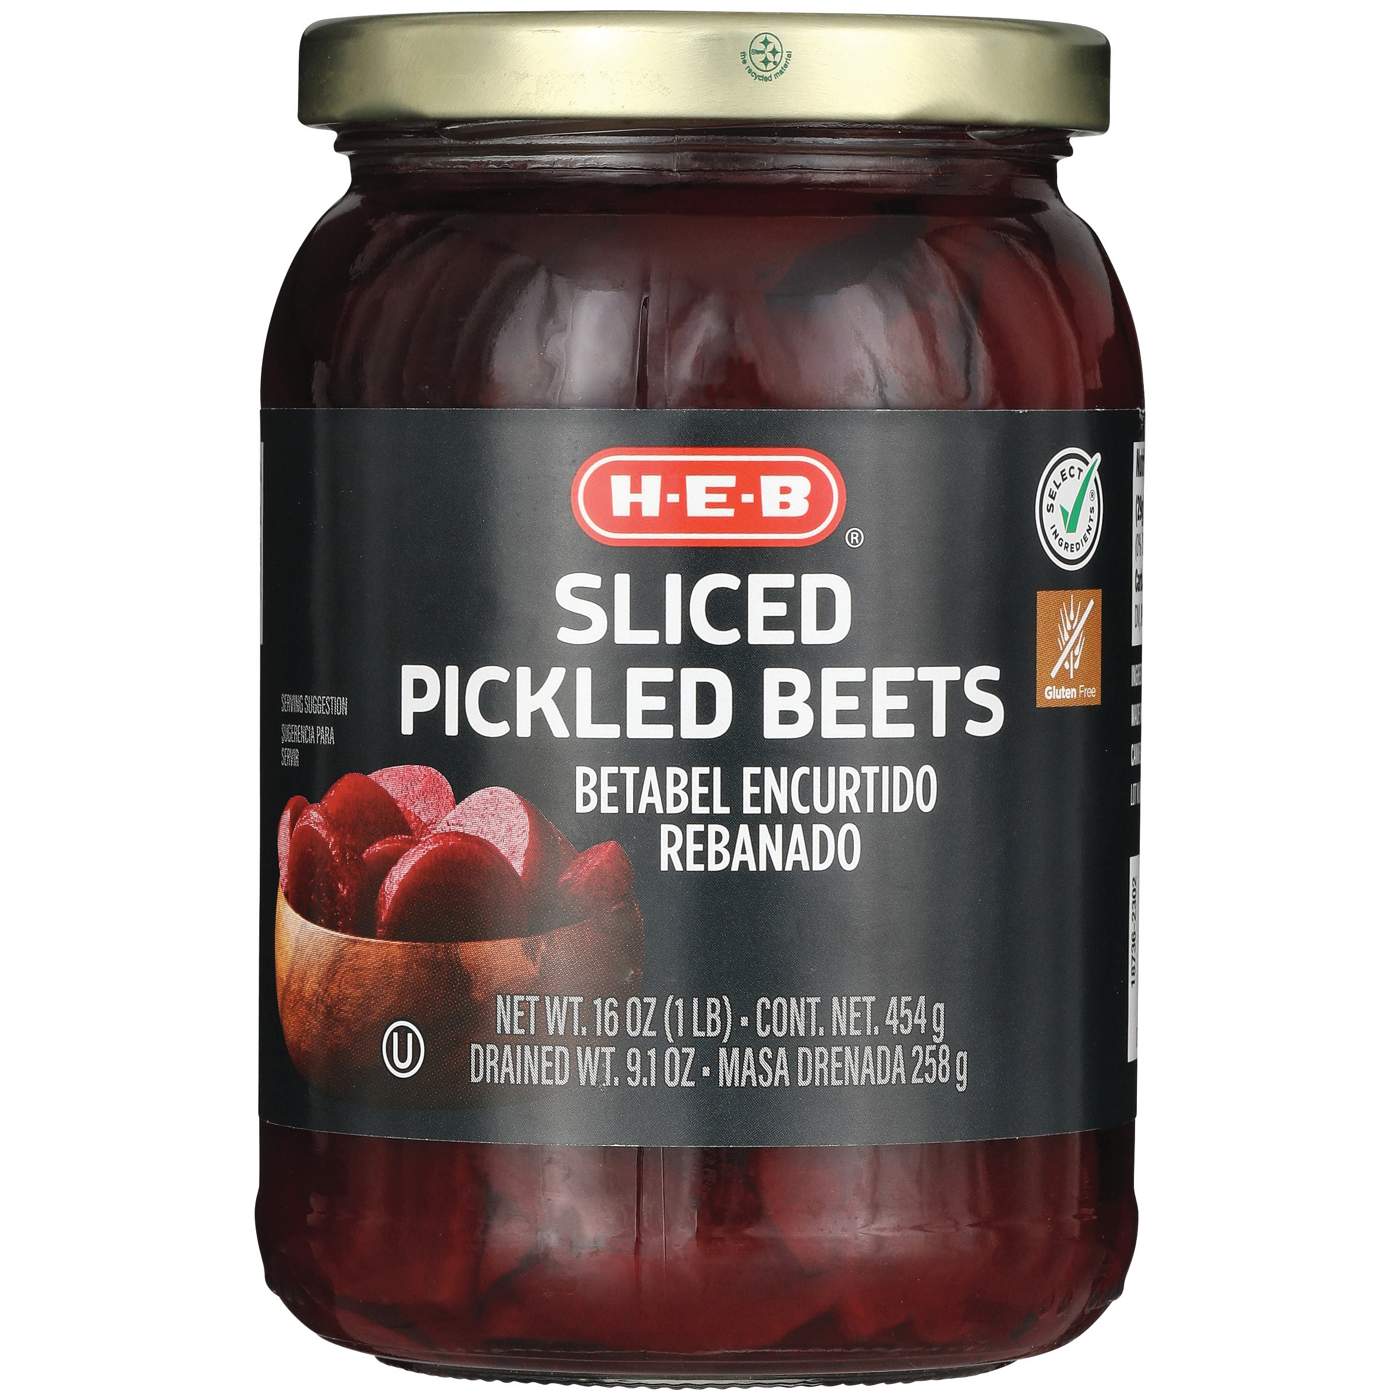 H-E-B Sliced Pickled Beets; image 1 of 2